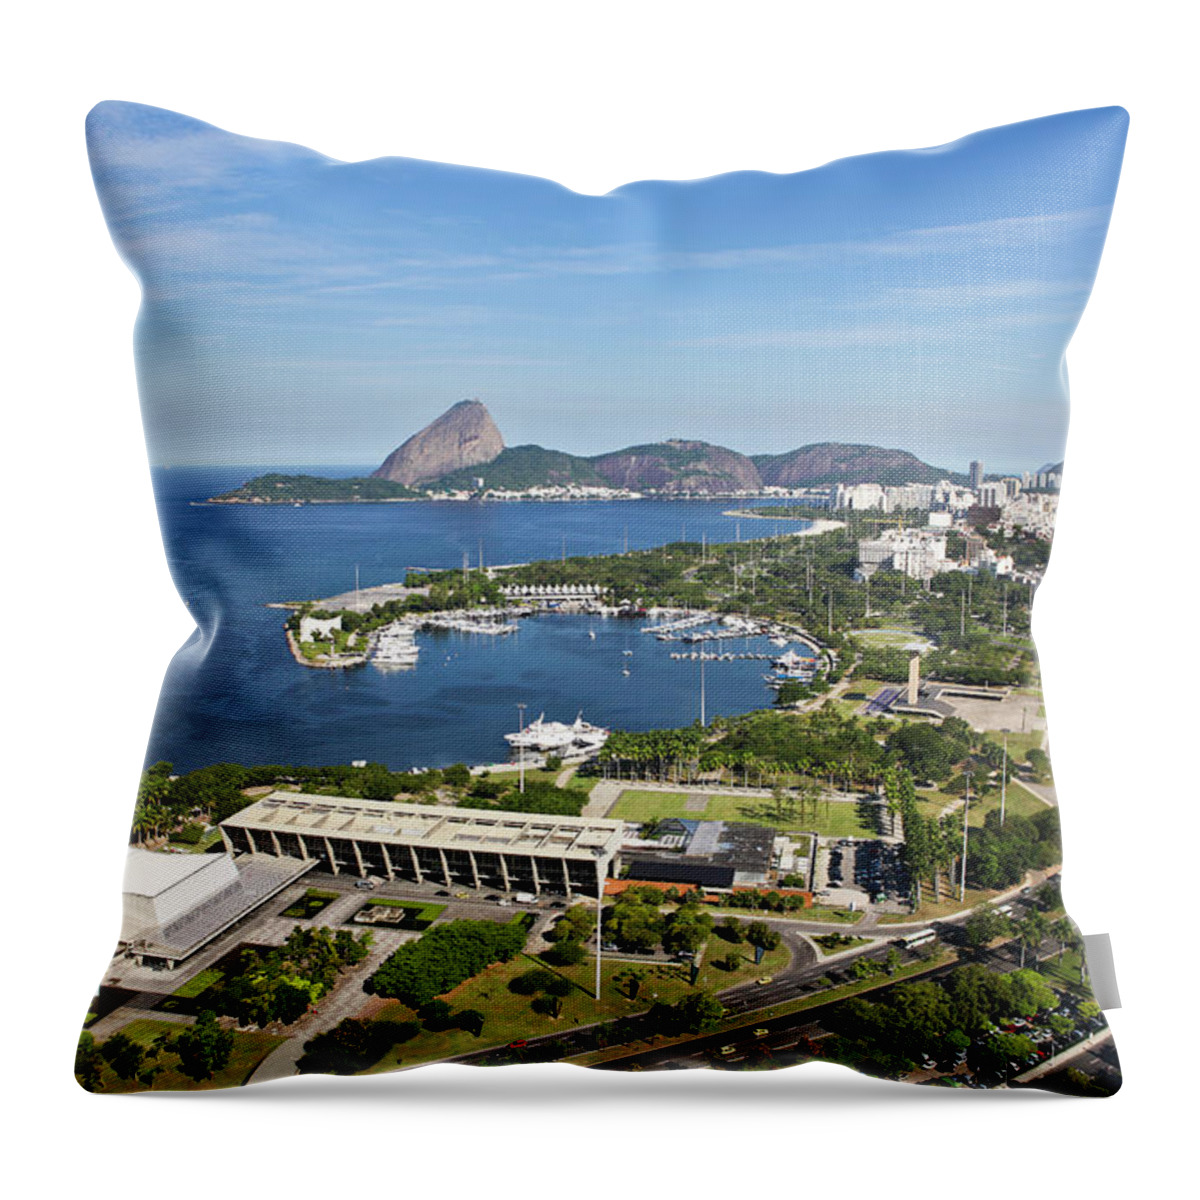 Scenics Throw Pillow featuring the photograph Rio De Janeiro Postcard by Ruy Barbosa Pinto